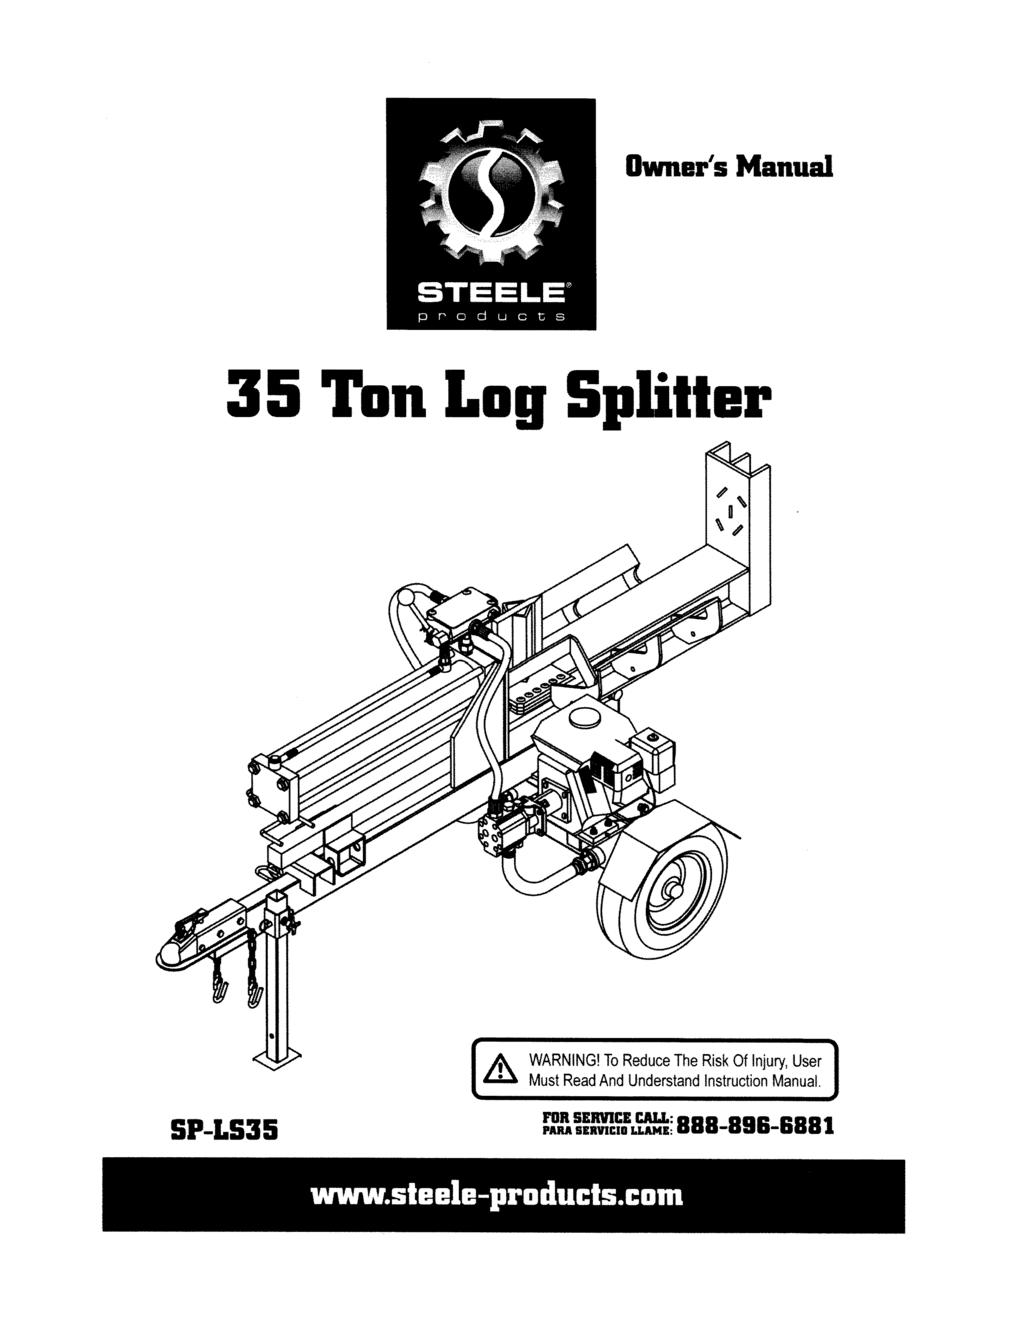 Owner's Manual 35 Ton L0g 5pfitter "! WARNING!